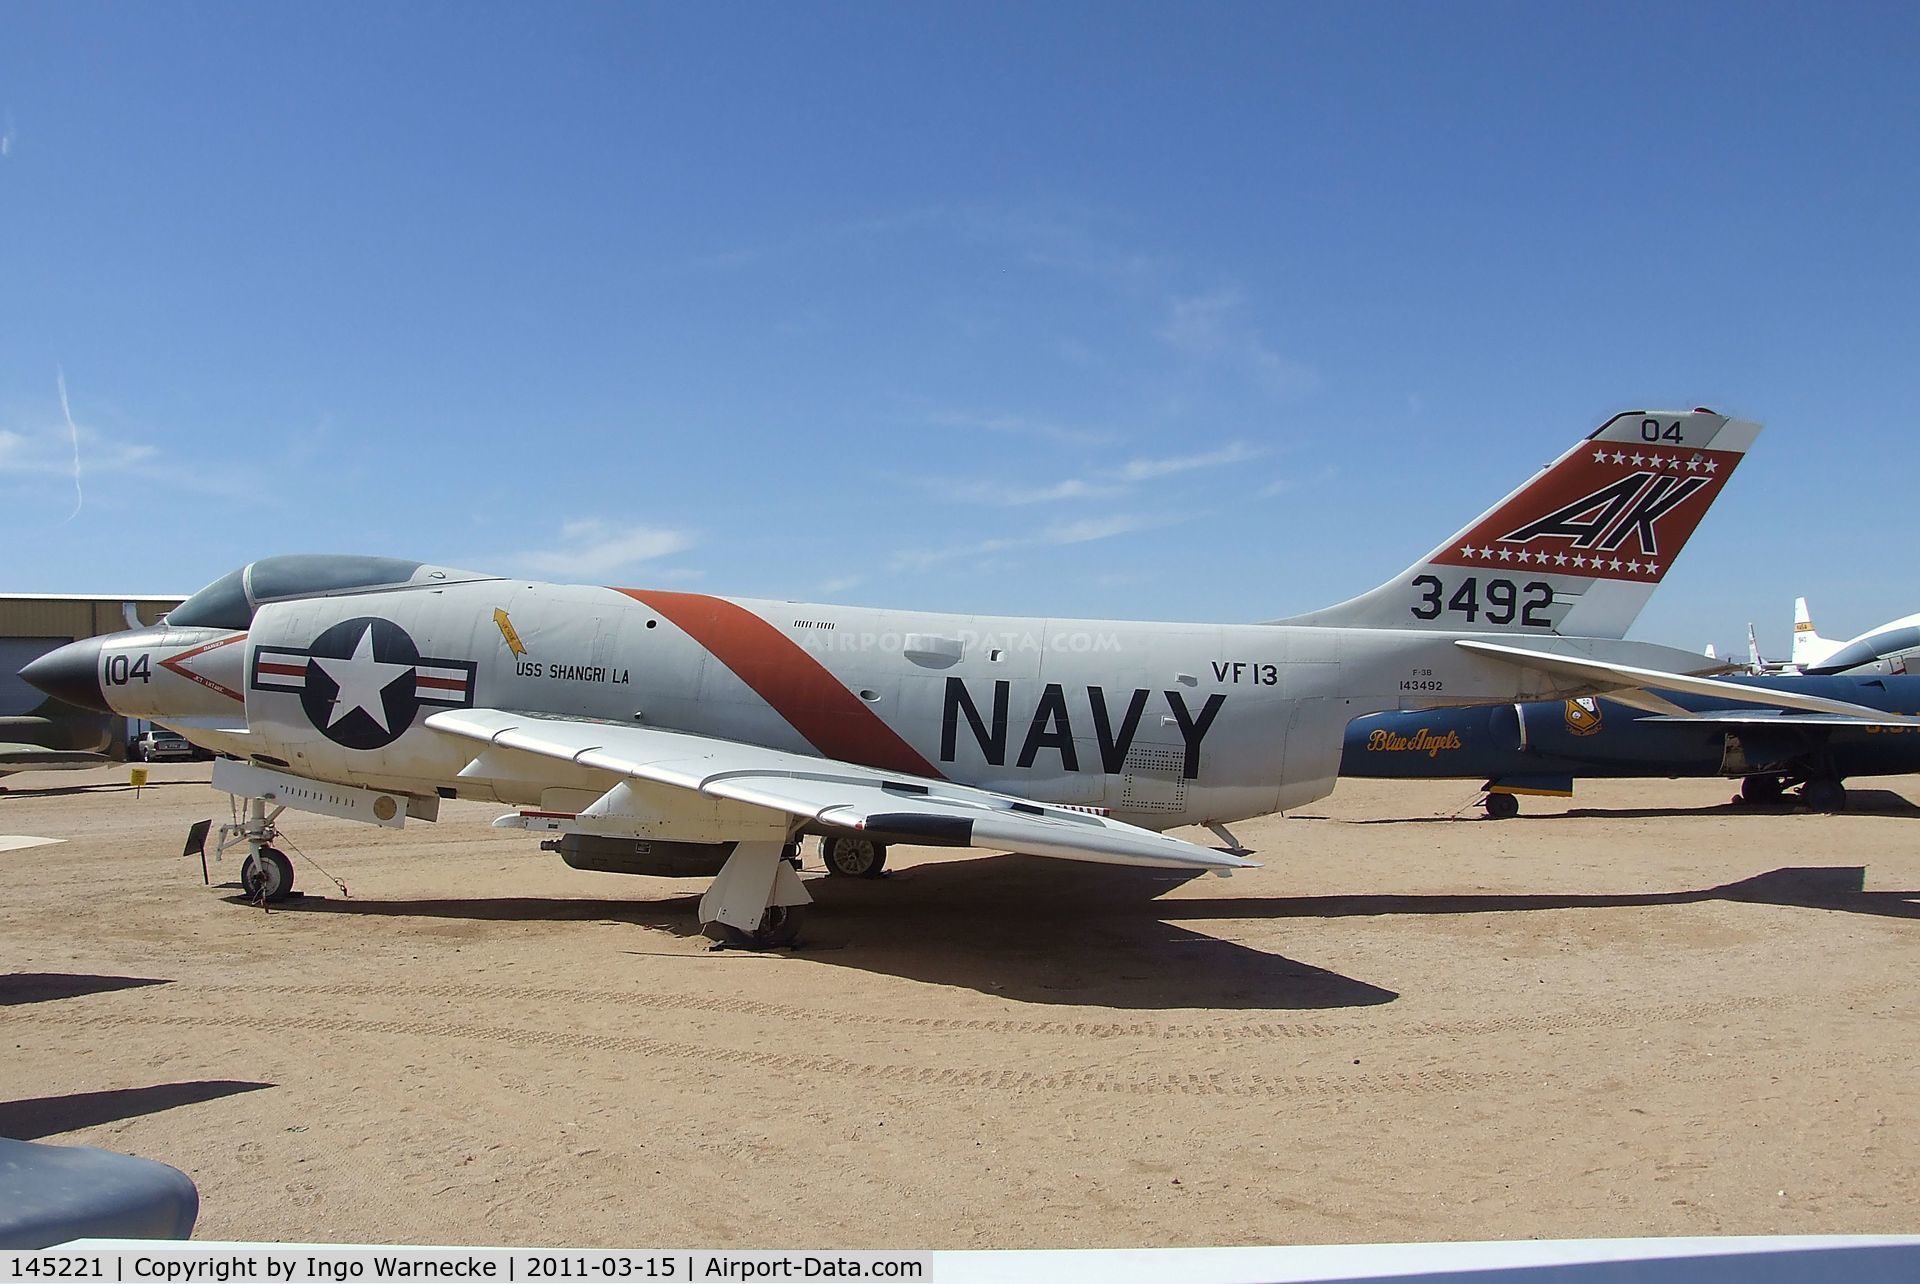 145221, McDonnell F-3B Demon C/N 390, McDonnell F-3B Demon at the Pima Air & Space Museum, Tucson AZ